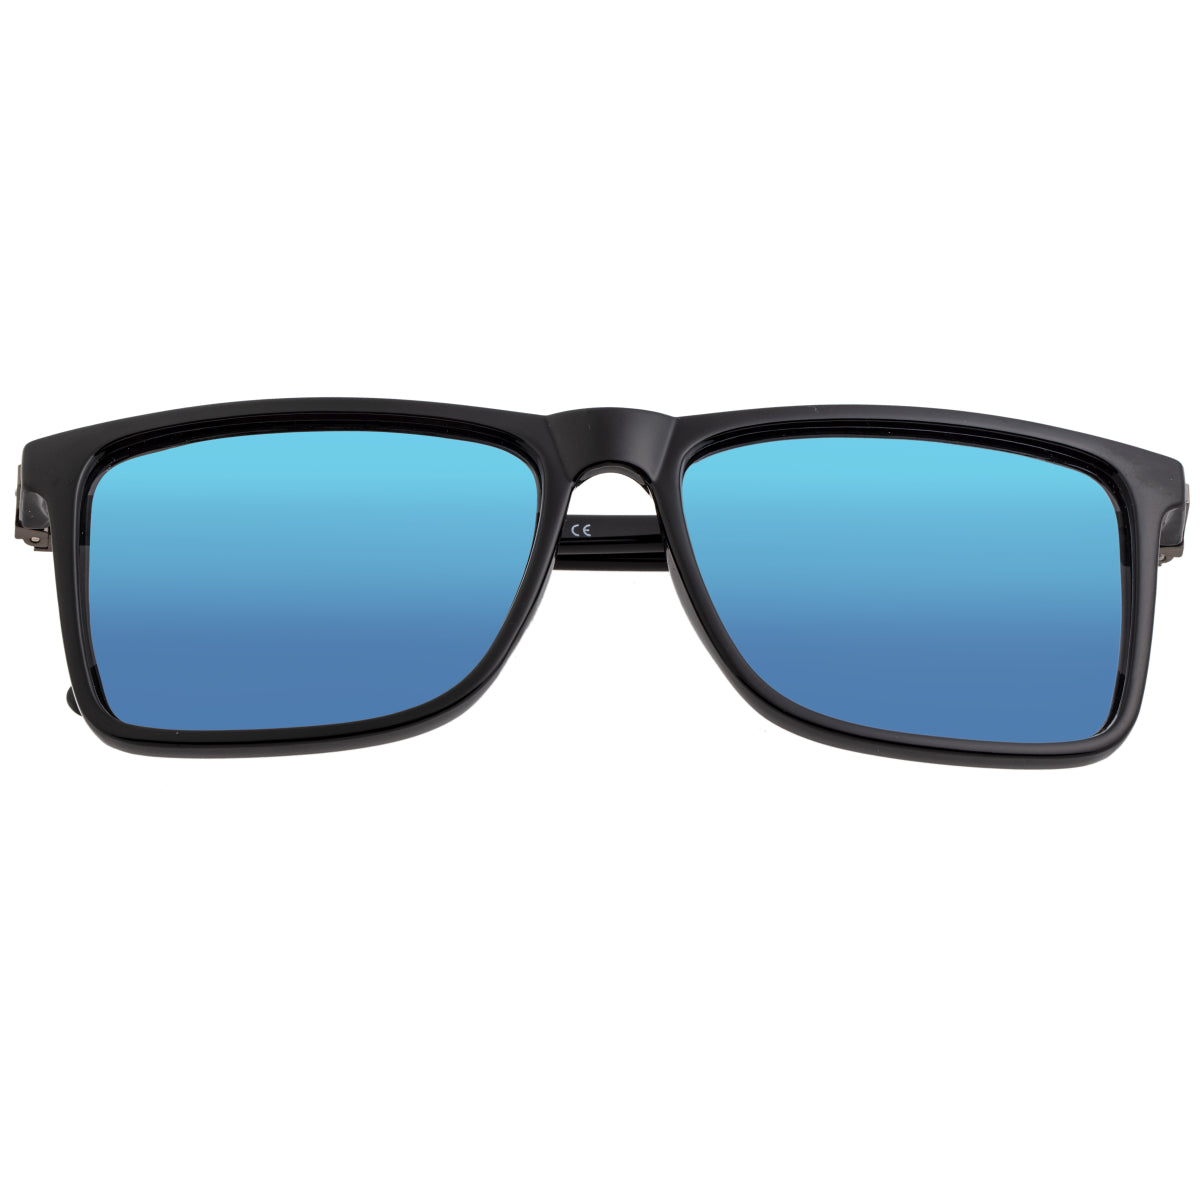 Breed Caelum Polarized Sunglasses - Black/Blue - BSG063BL